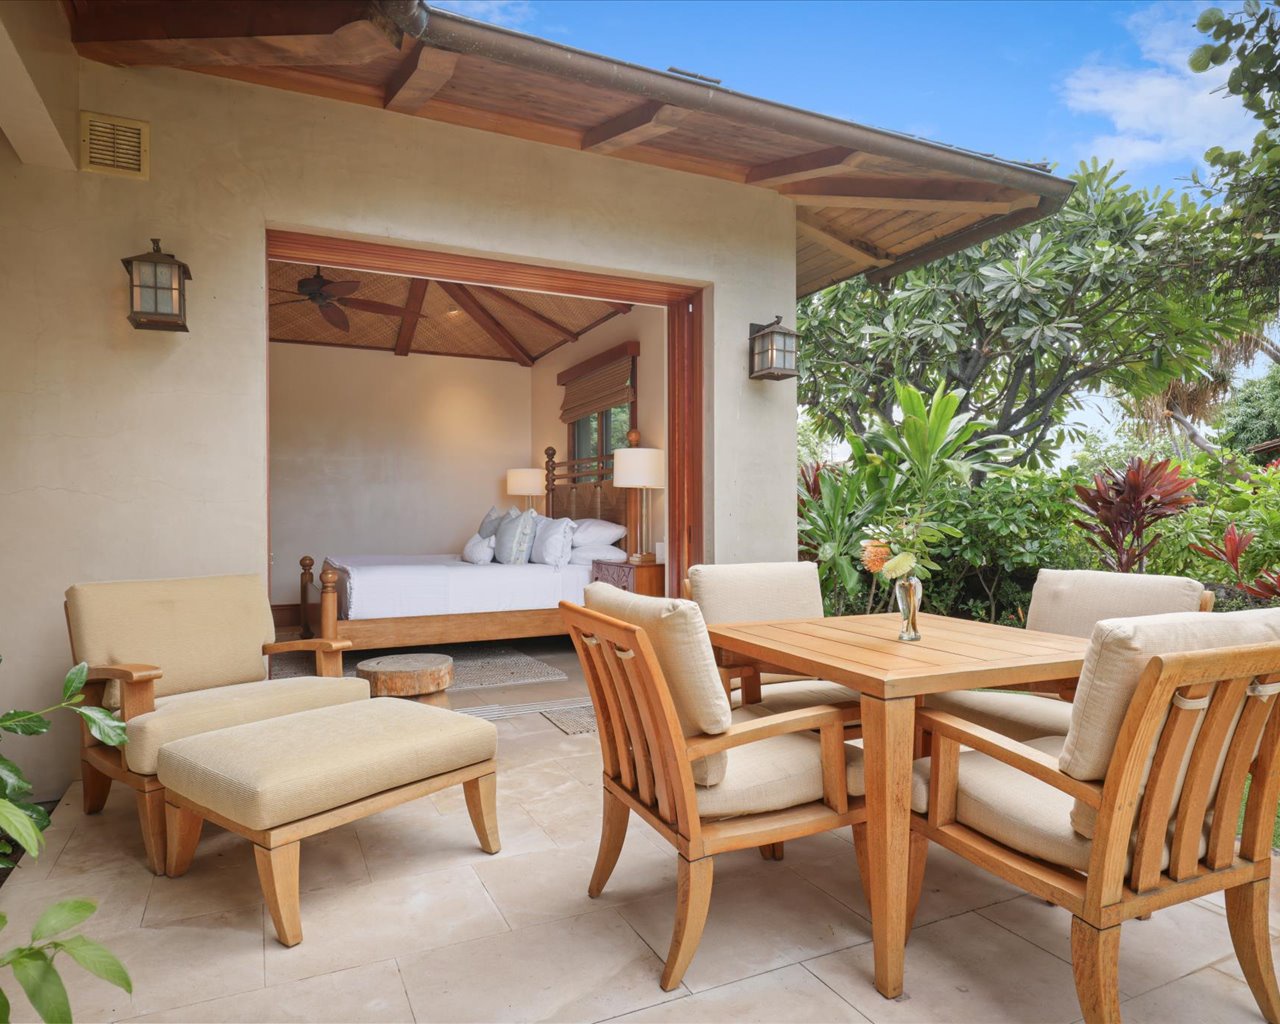 Kailua Kona Vacation Rentals, 3BD Pakui Street (131) Estate Home at Four Seasons Resort at Hualalai - Reverse view from the lanai into the bedroom